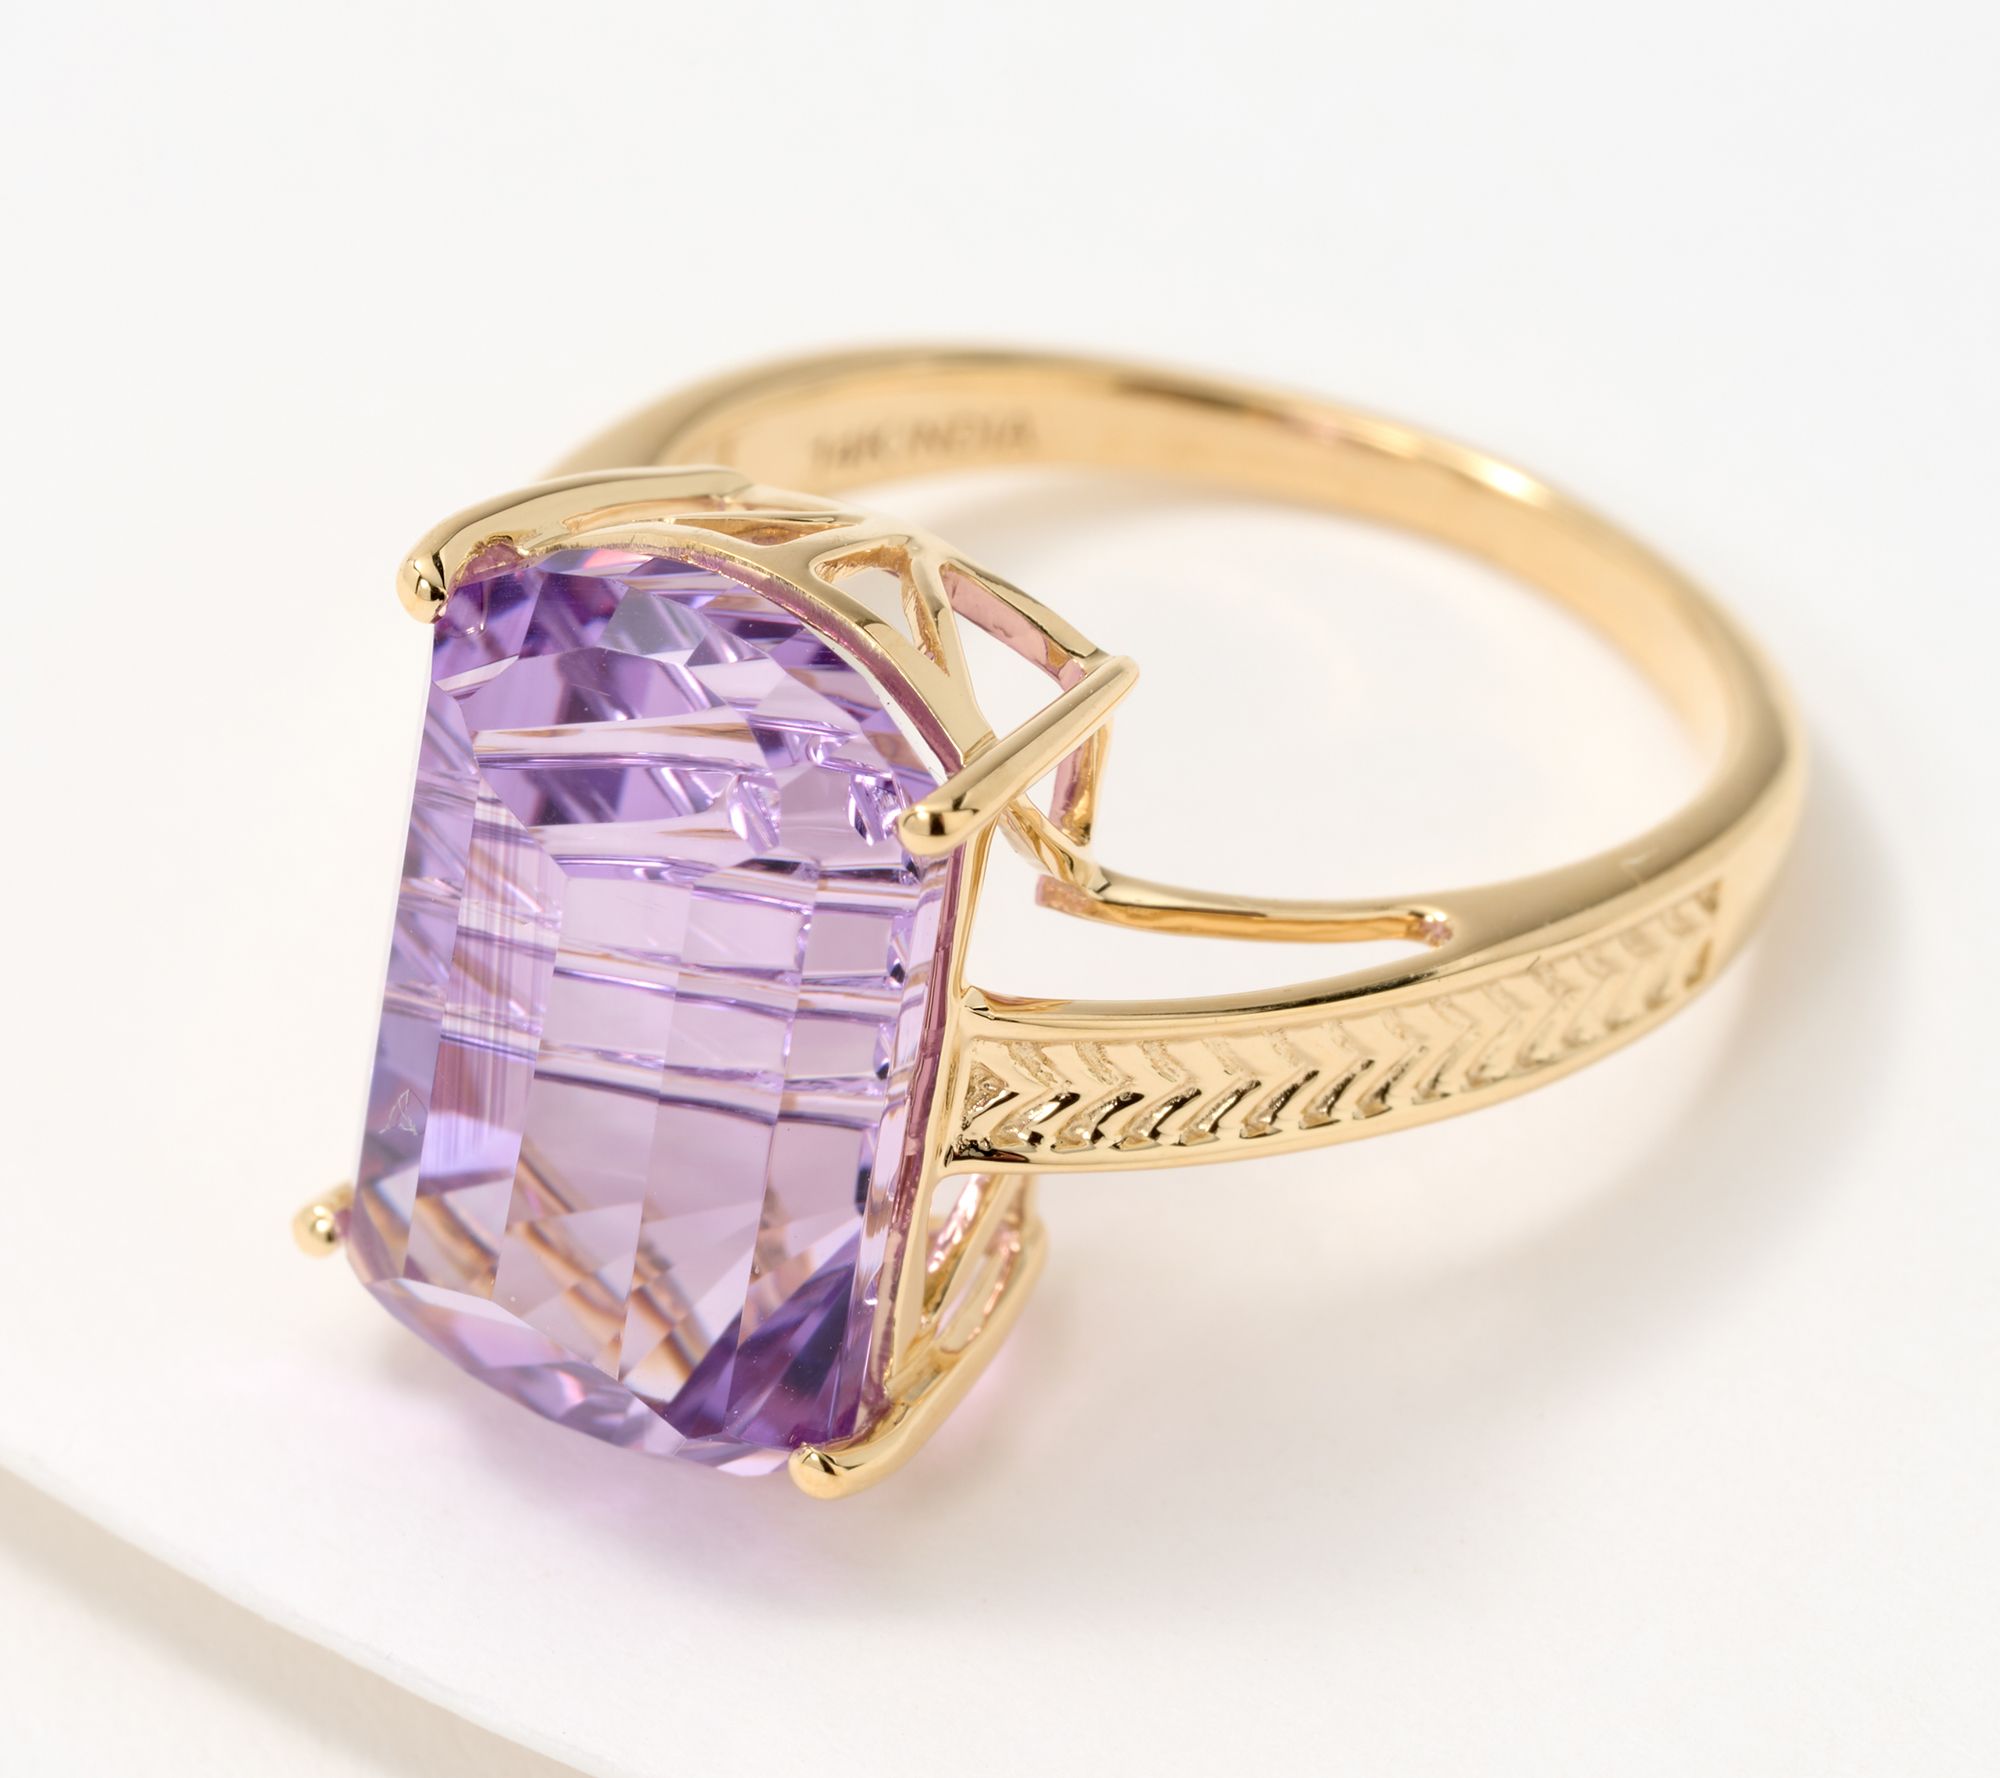 Glenn Lehrer Nine Point Star Cut Gemstone & Diamond Ring, Size 4, Pink Amethyst